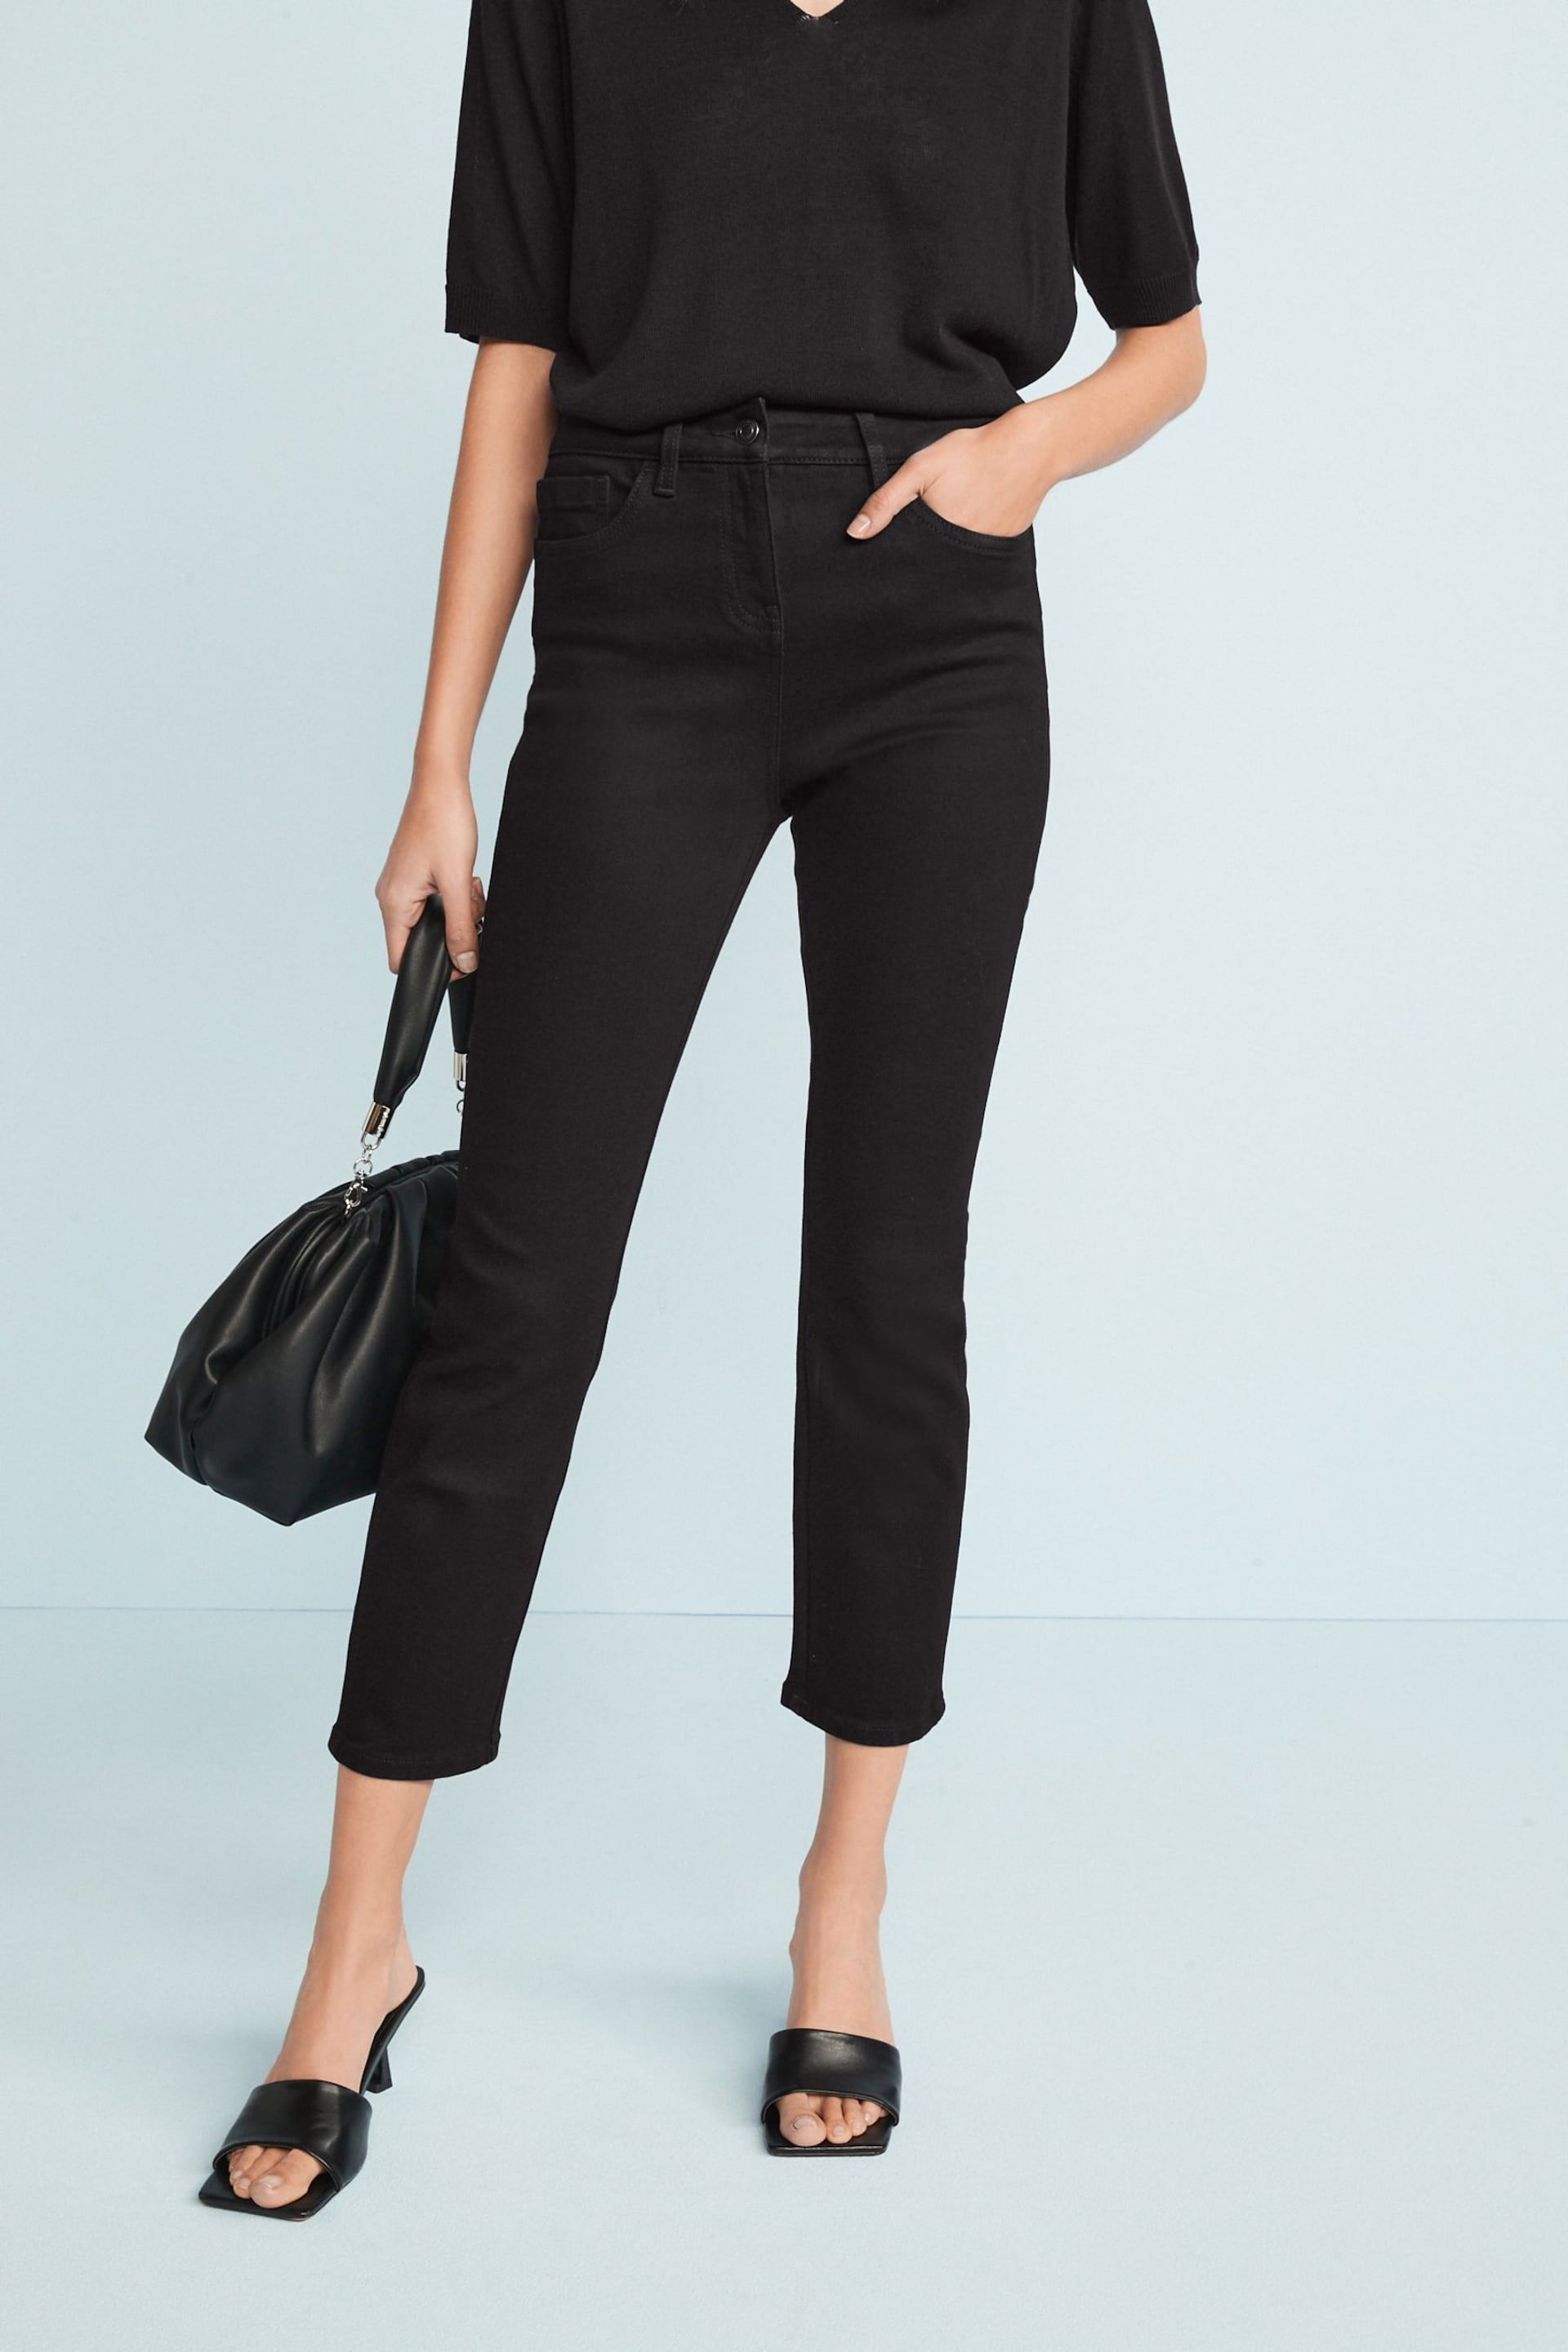 Black Cropped Slim Jeans - Image 2 of 2